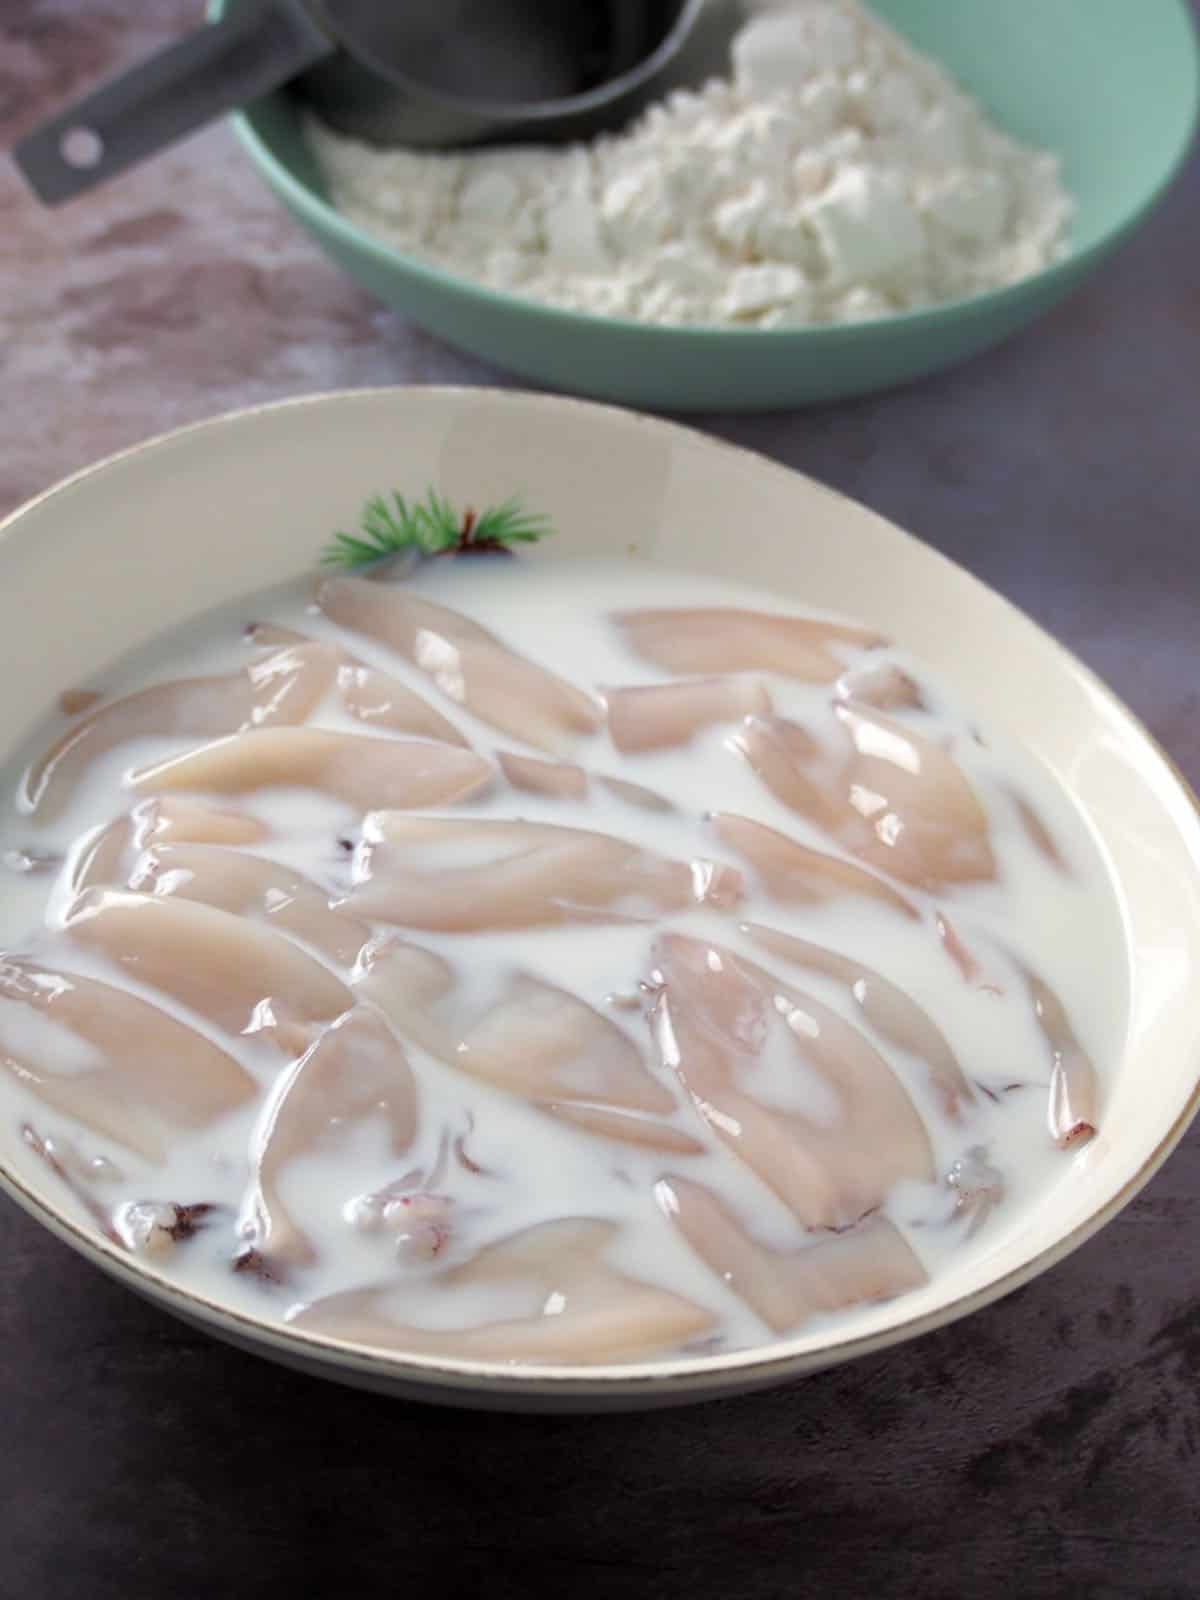 cleaned squid soaking in milk in a bowl